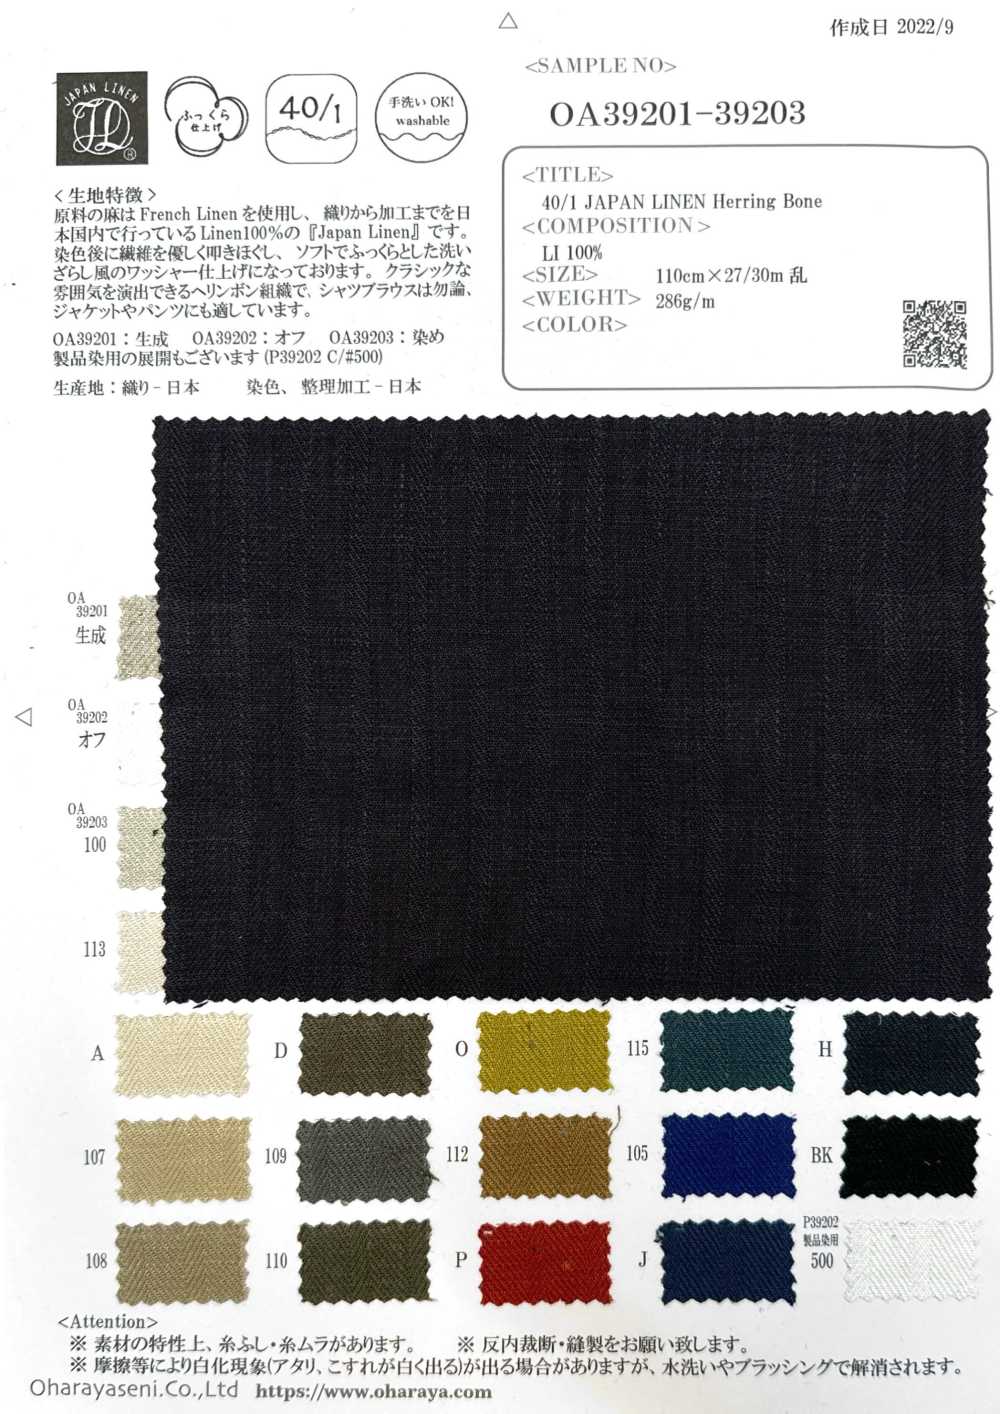 OA39203 40/1 JAPAN LINEN Herring Bone[Textile / Fabric] Oharayaseni